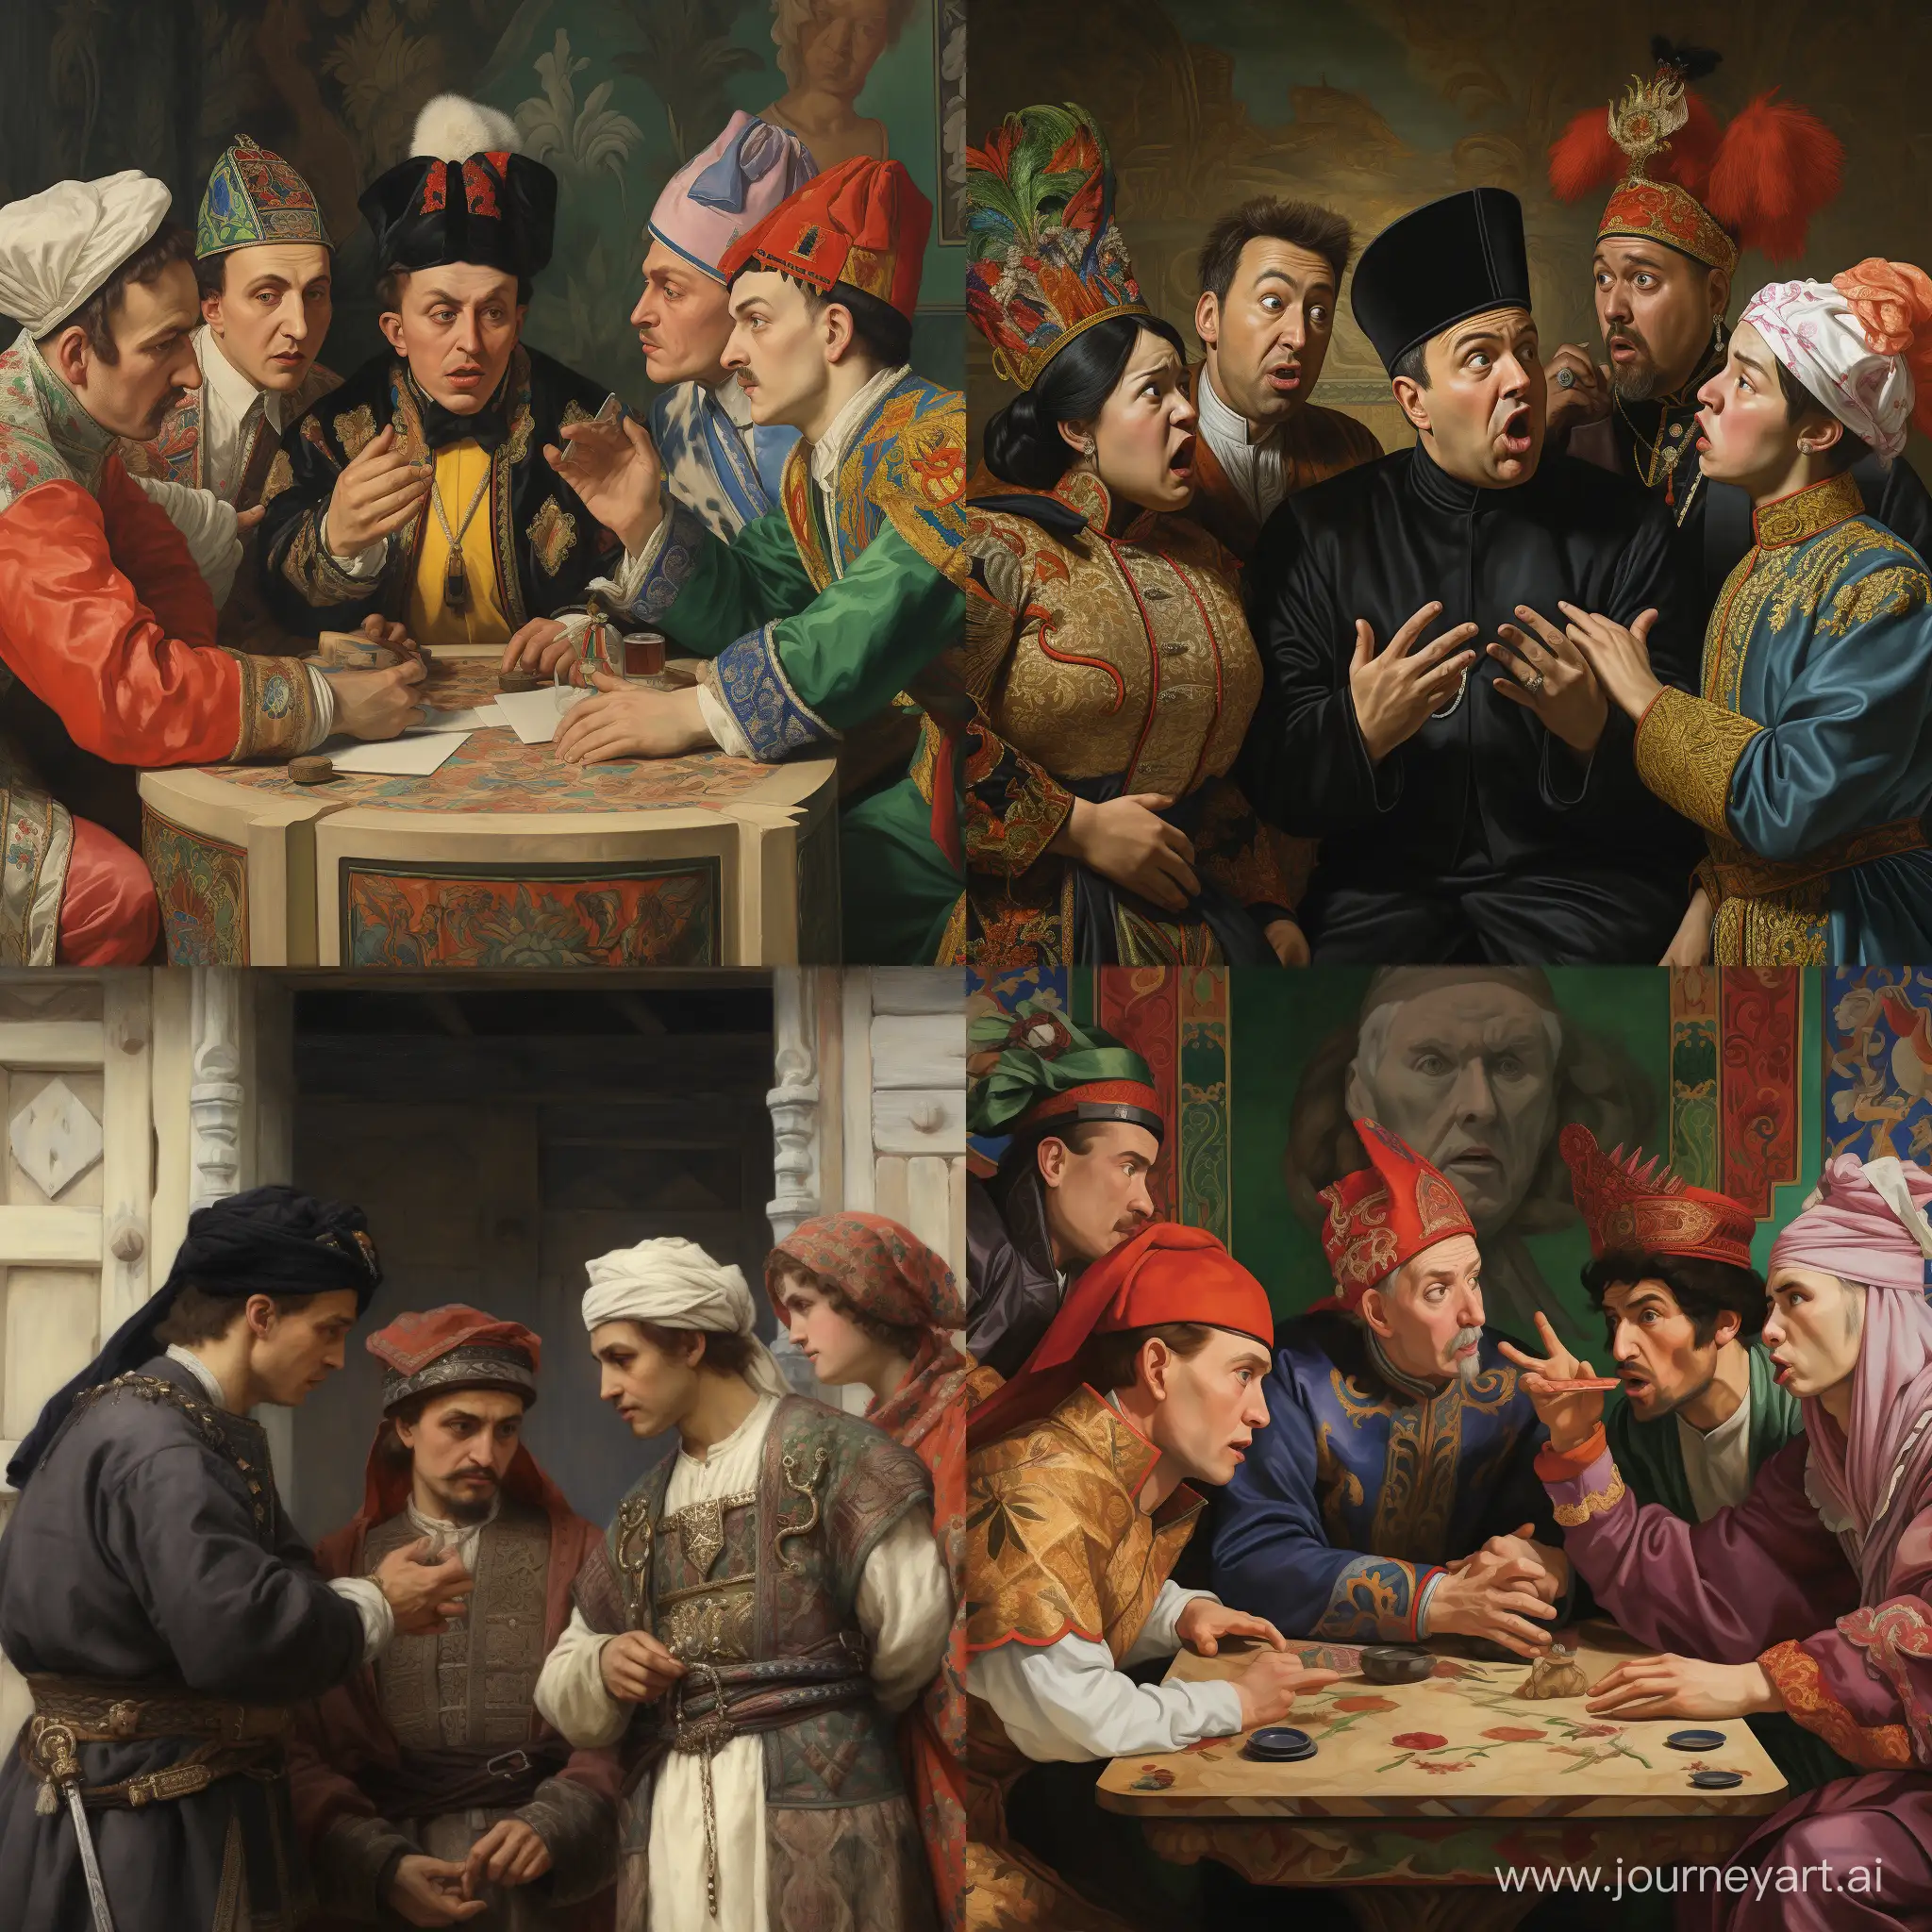 Polish, Turkish, Belarusian and Kazakh argueing